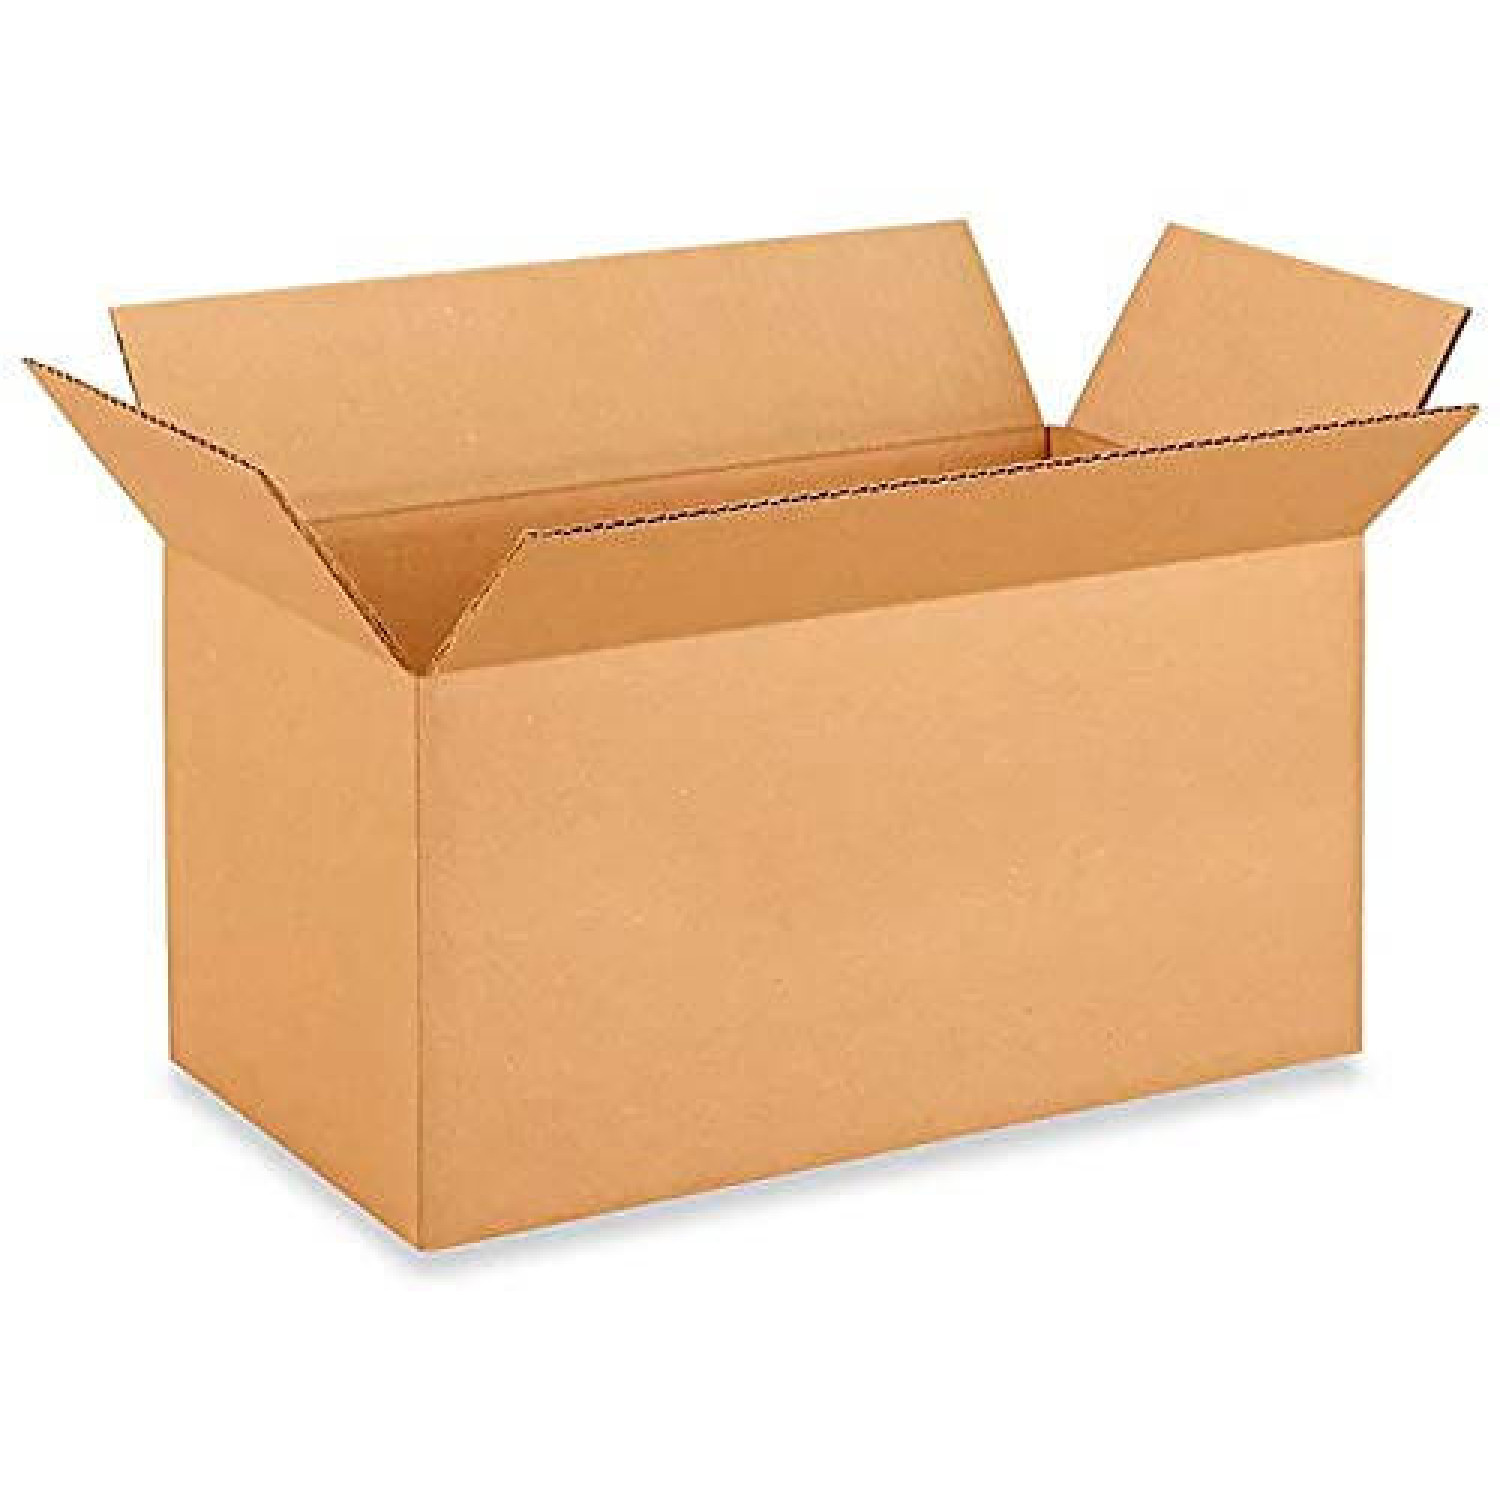 https://idlpack.com/image/cache/catalog/Products/Boxes/16L-8W-8H-Medium-Cardboard-Box-1500x1500.jpg